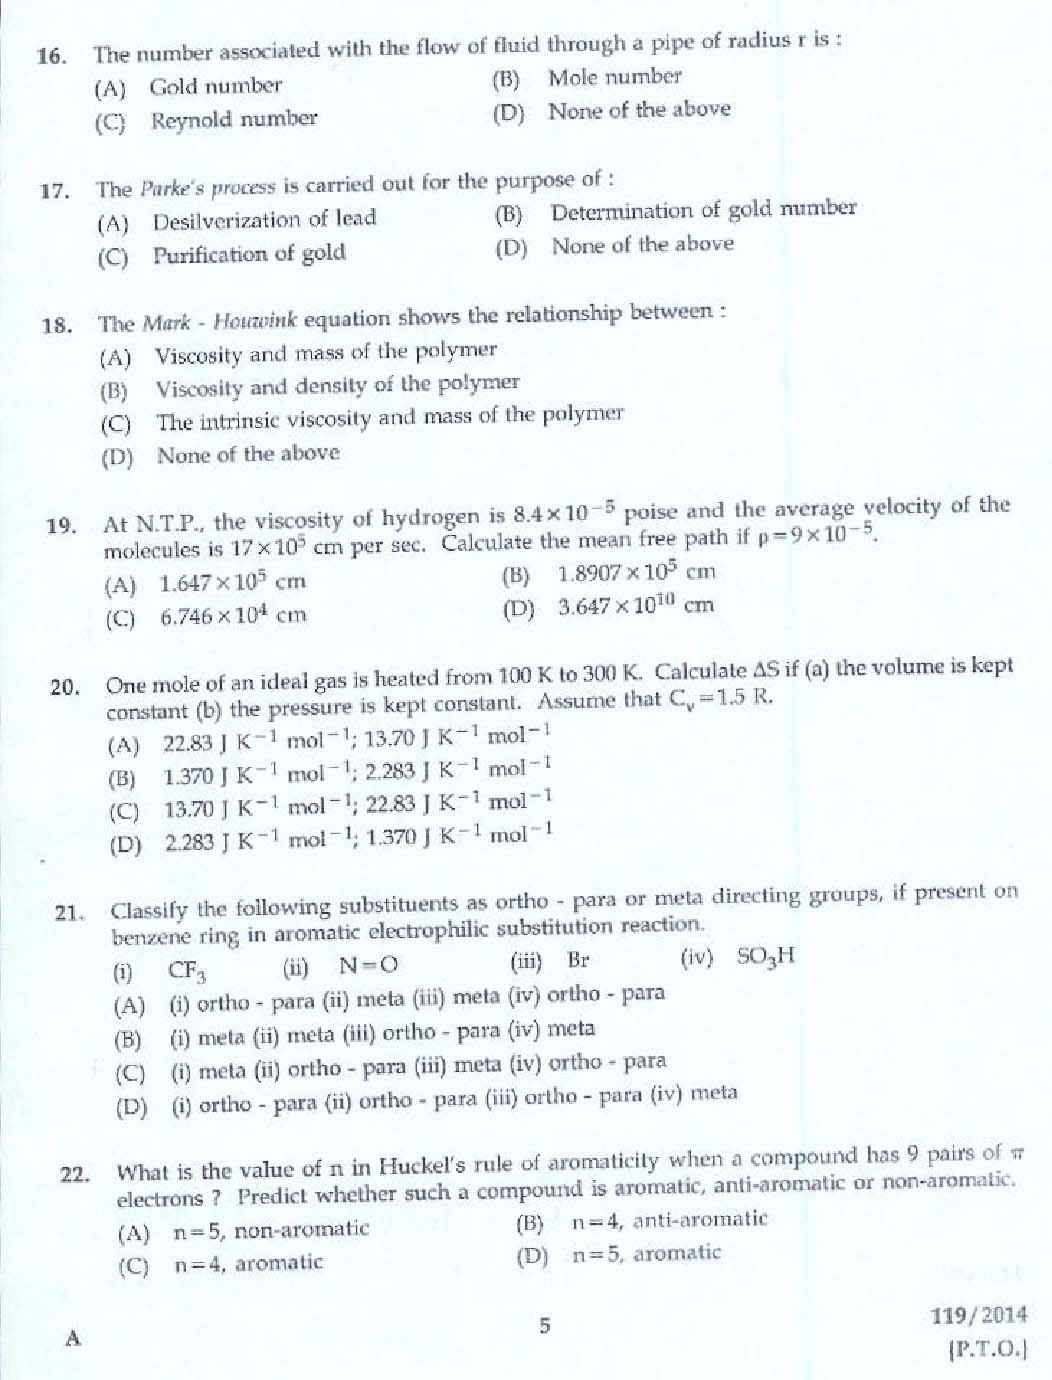 KPSC Lecturer In Chemistry Exam 2014 Code 1192014 3